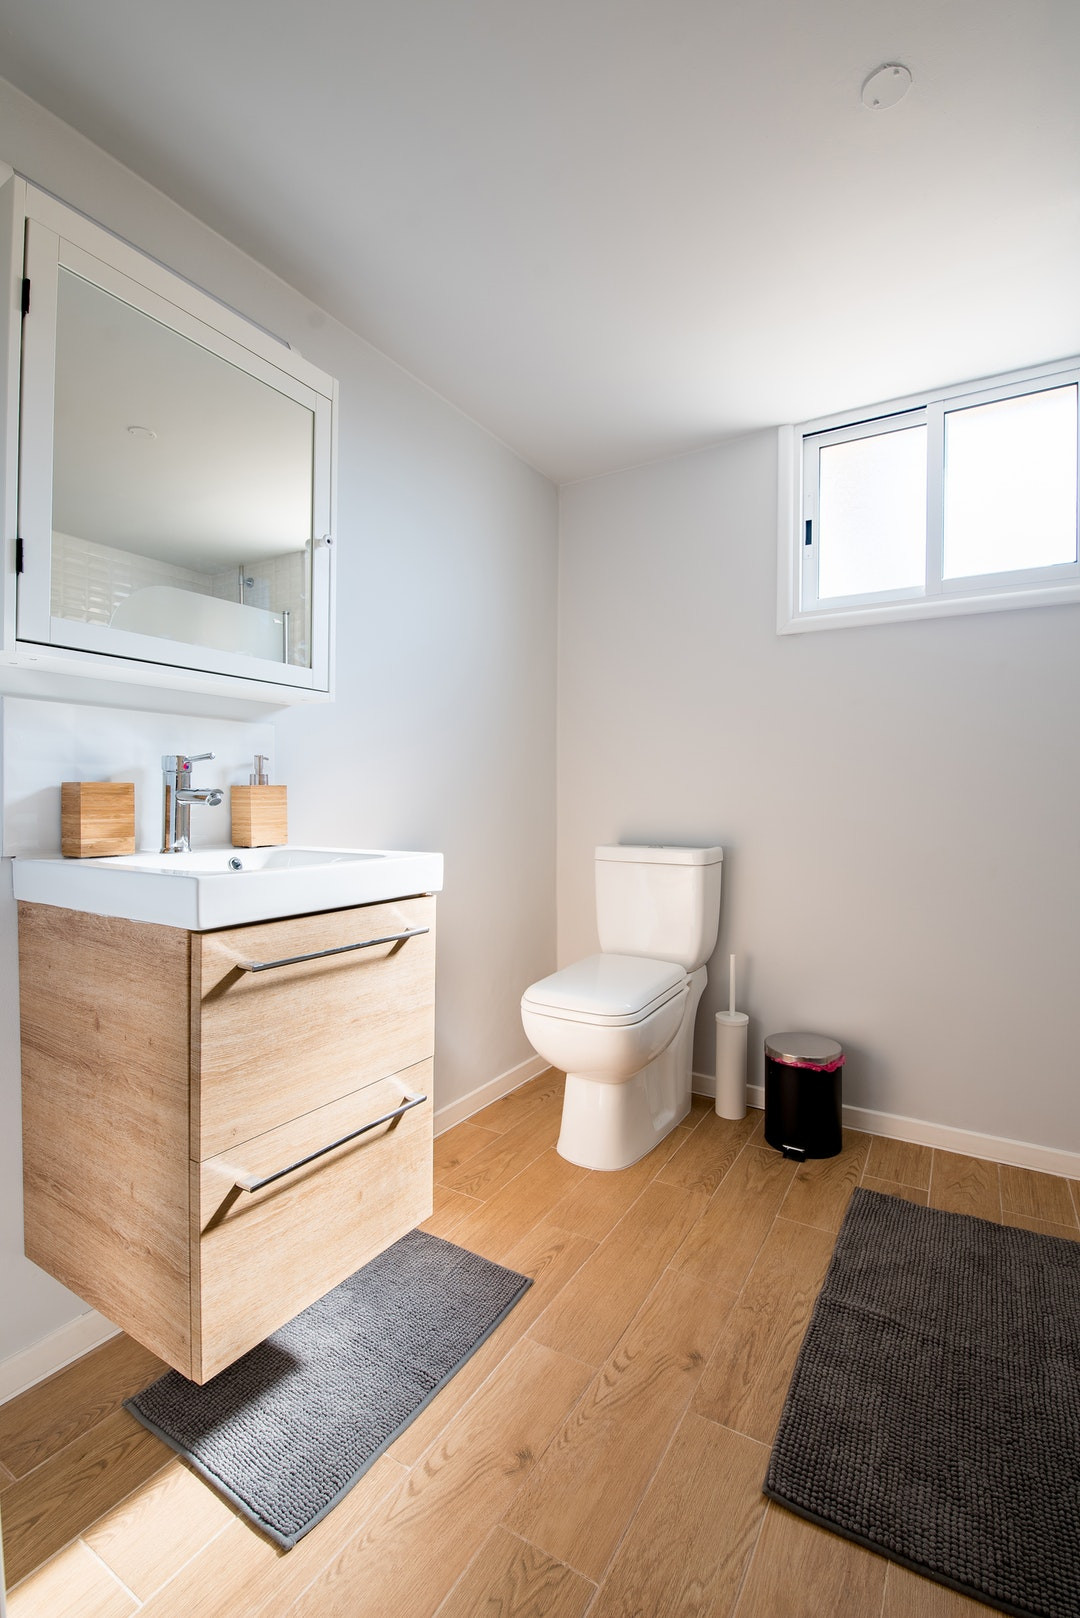 Best Flooring For Small Bathroom
 Small Bathroom Flooring Ideas Your Best Options Let s